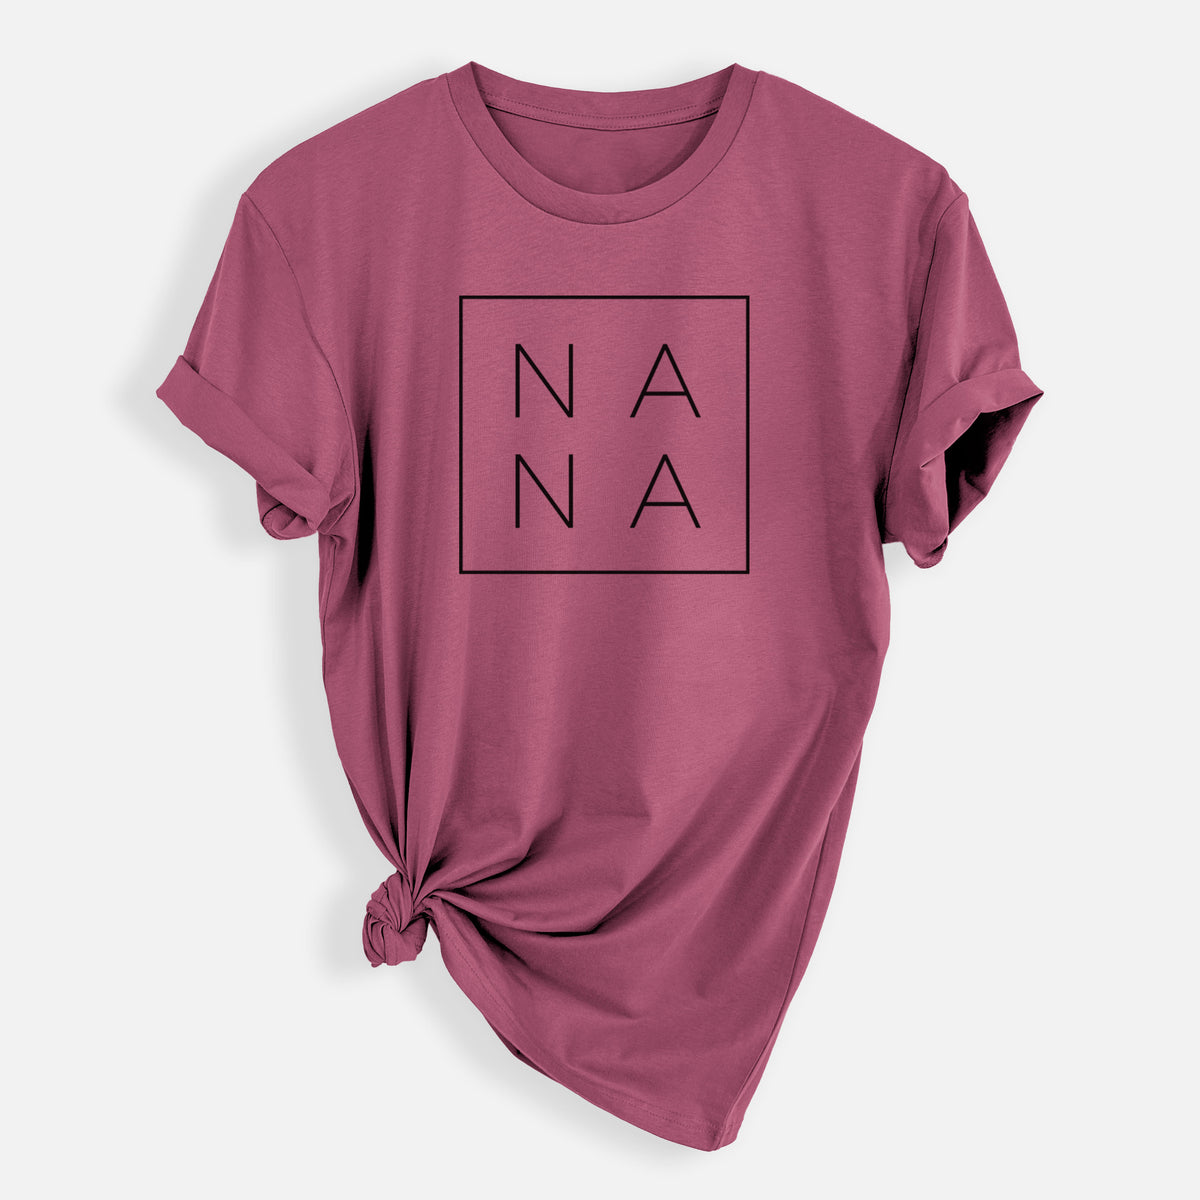 Nana Boxed - Mens Everyday Staple Tee